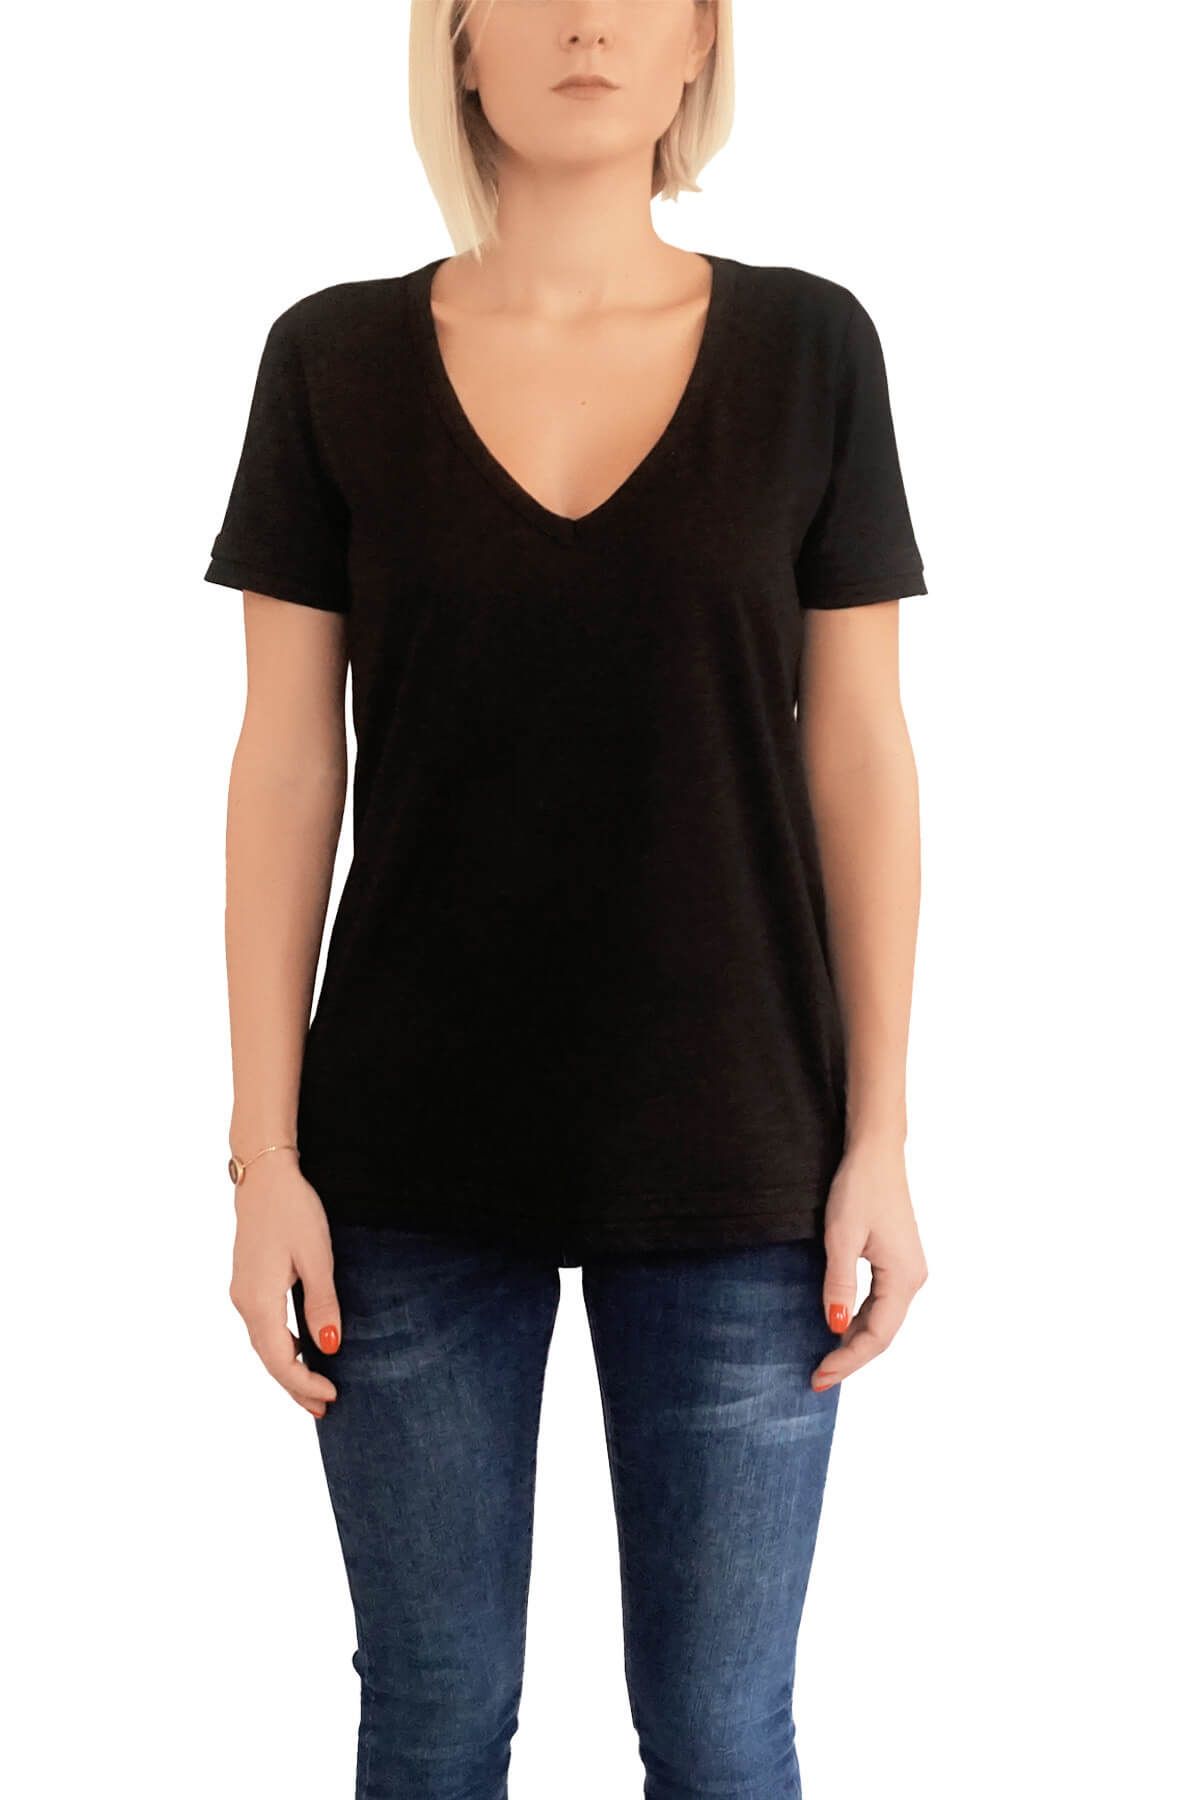 Mof Basics Kadın Siyah T-Shirt DVYT-S